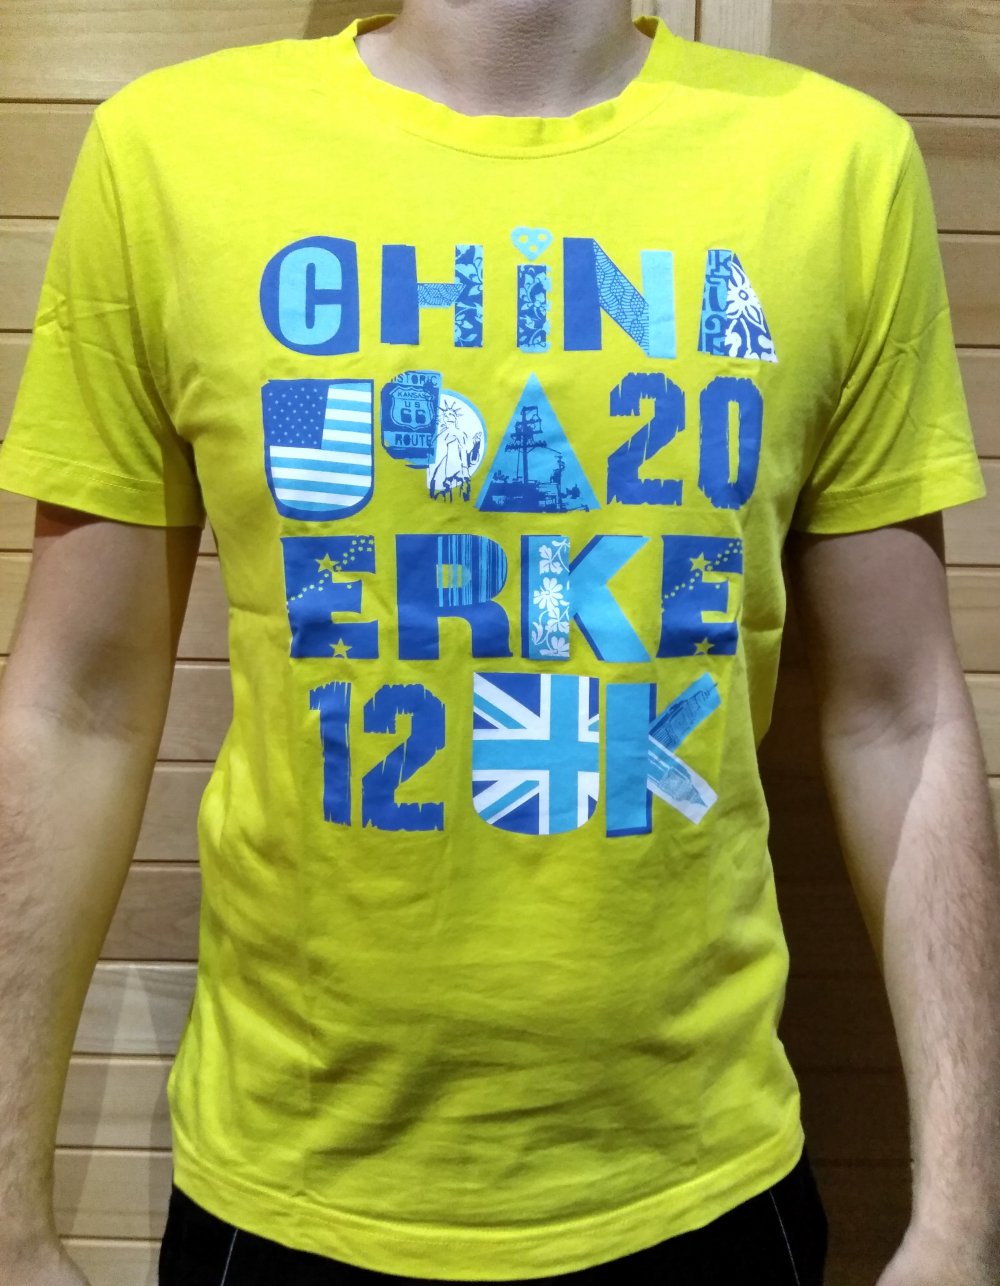 ERKE China USA UK T-Shirt 2012